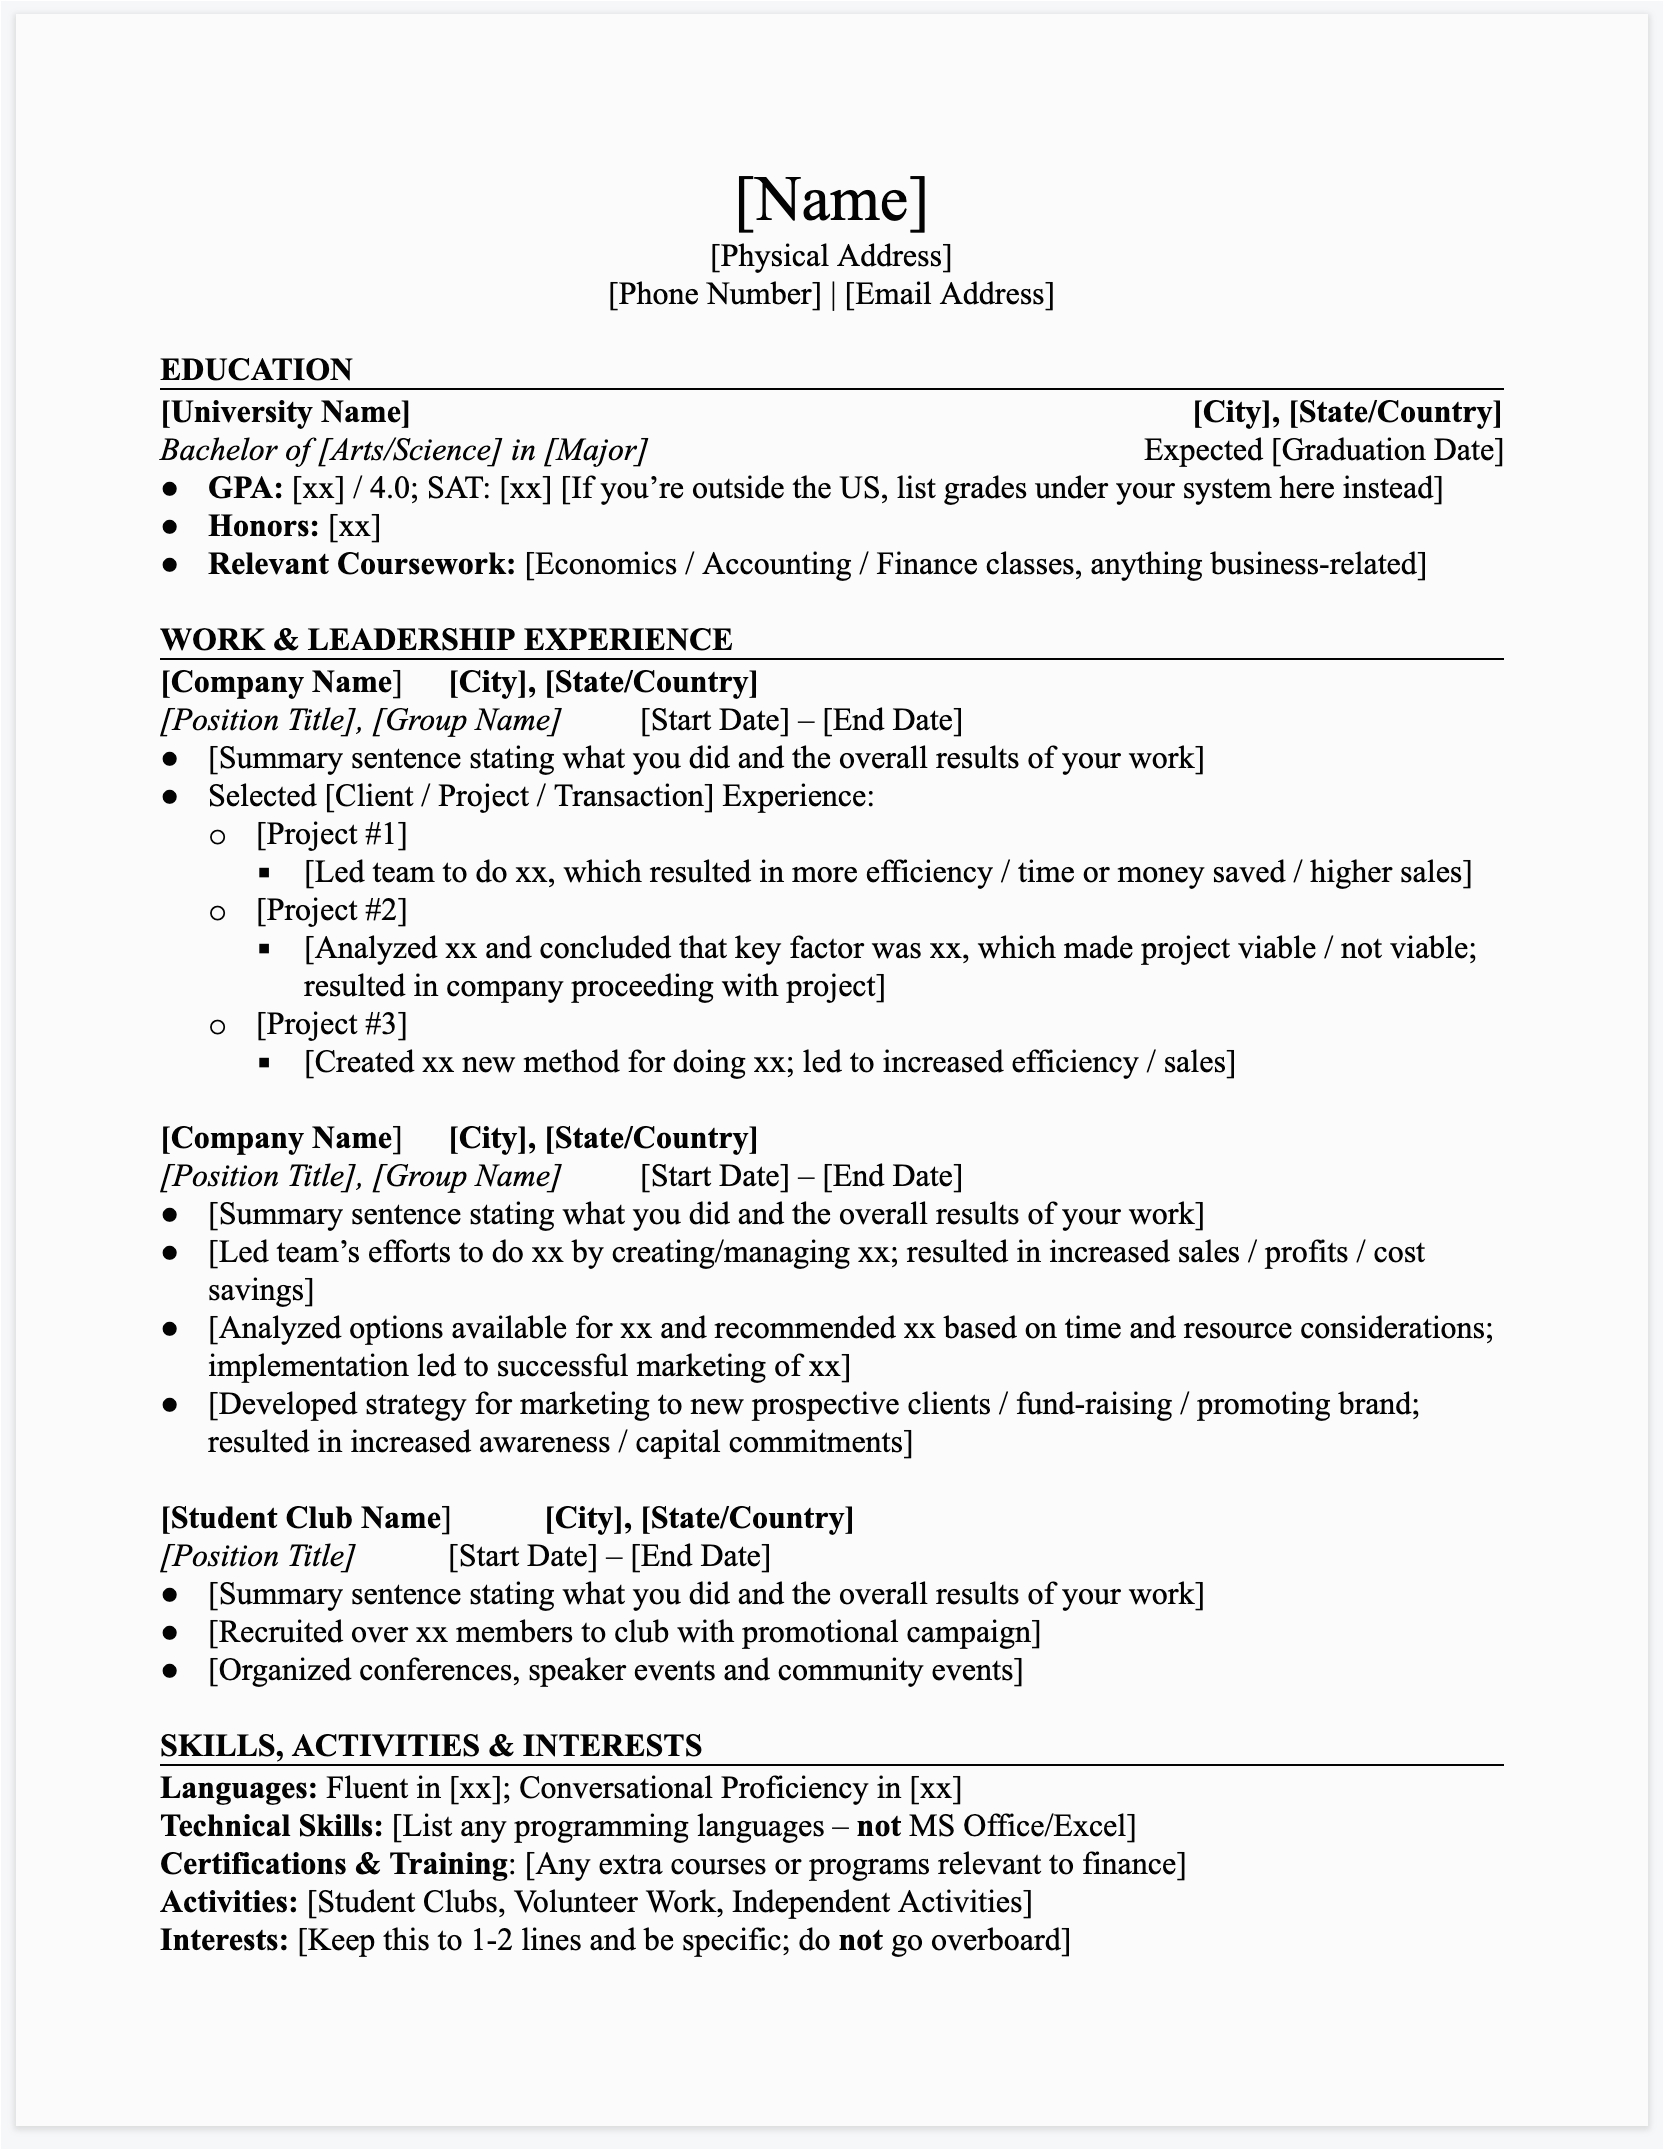 Ub School Of Management Resume Template Undergraduate Resume Template Doc 5 Law School Resume